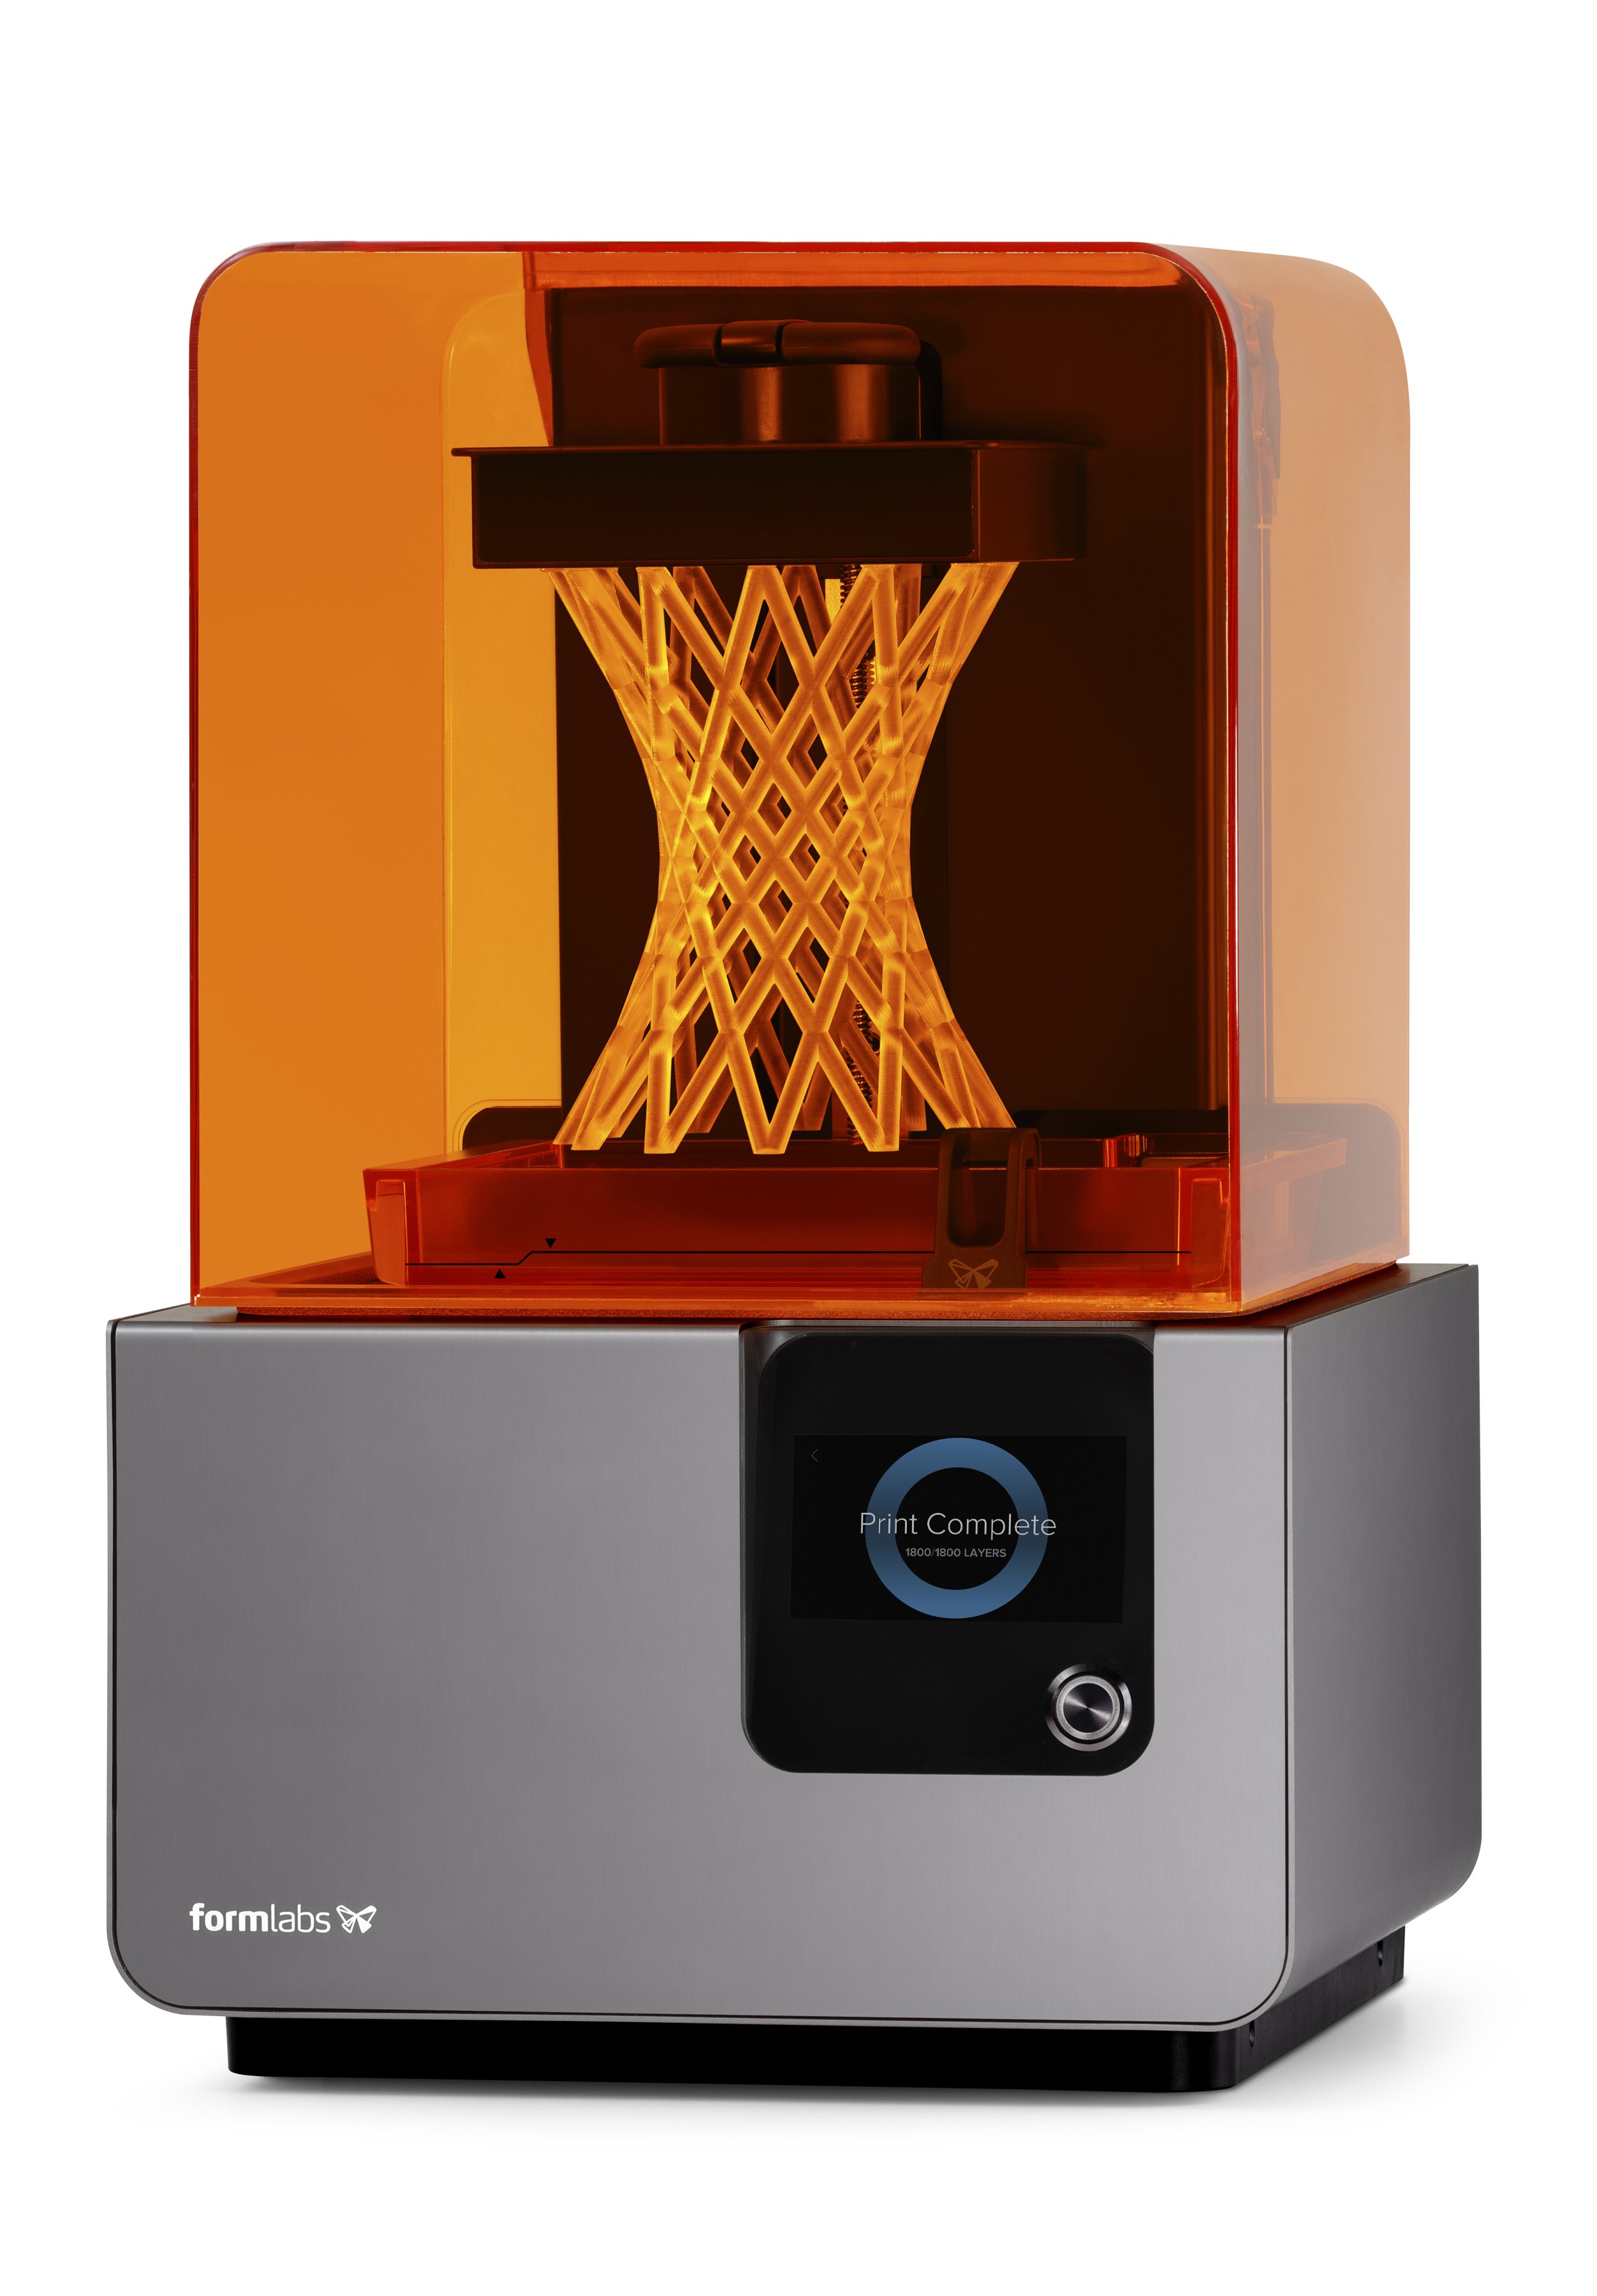 3D Printer Buying Guide 2017 - Form 2 Printer Three Quarters Hart